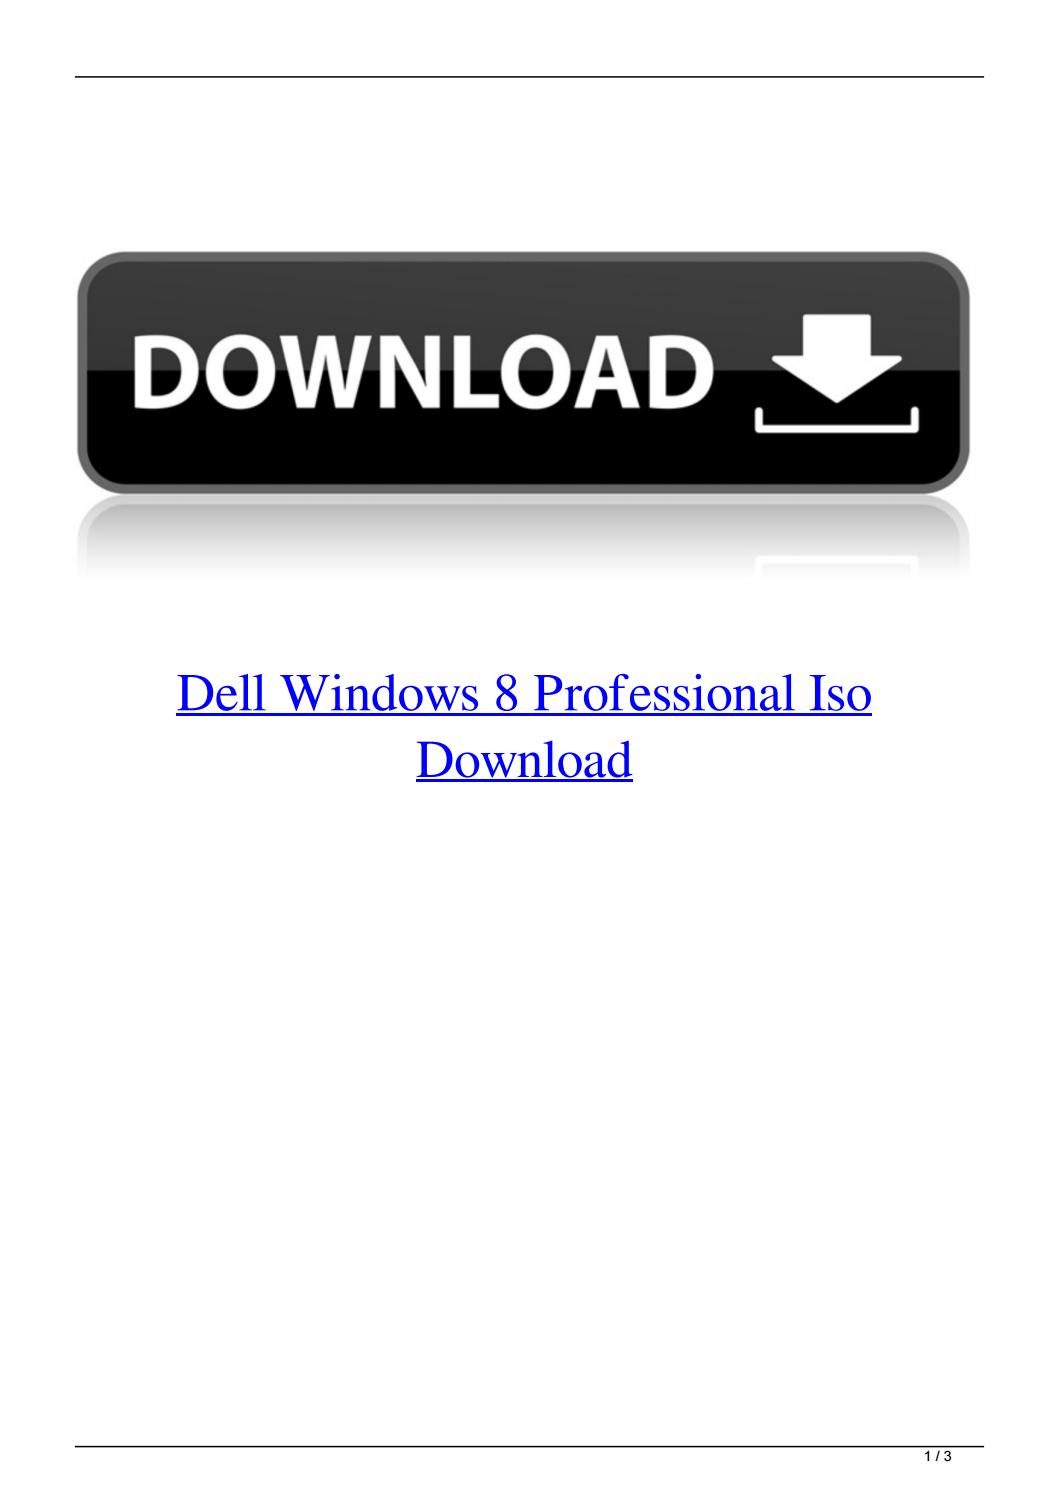 Windows 8.0 iso download oem windows 7